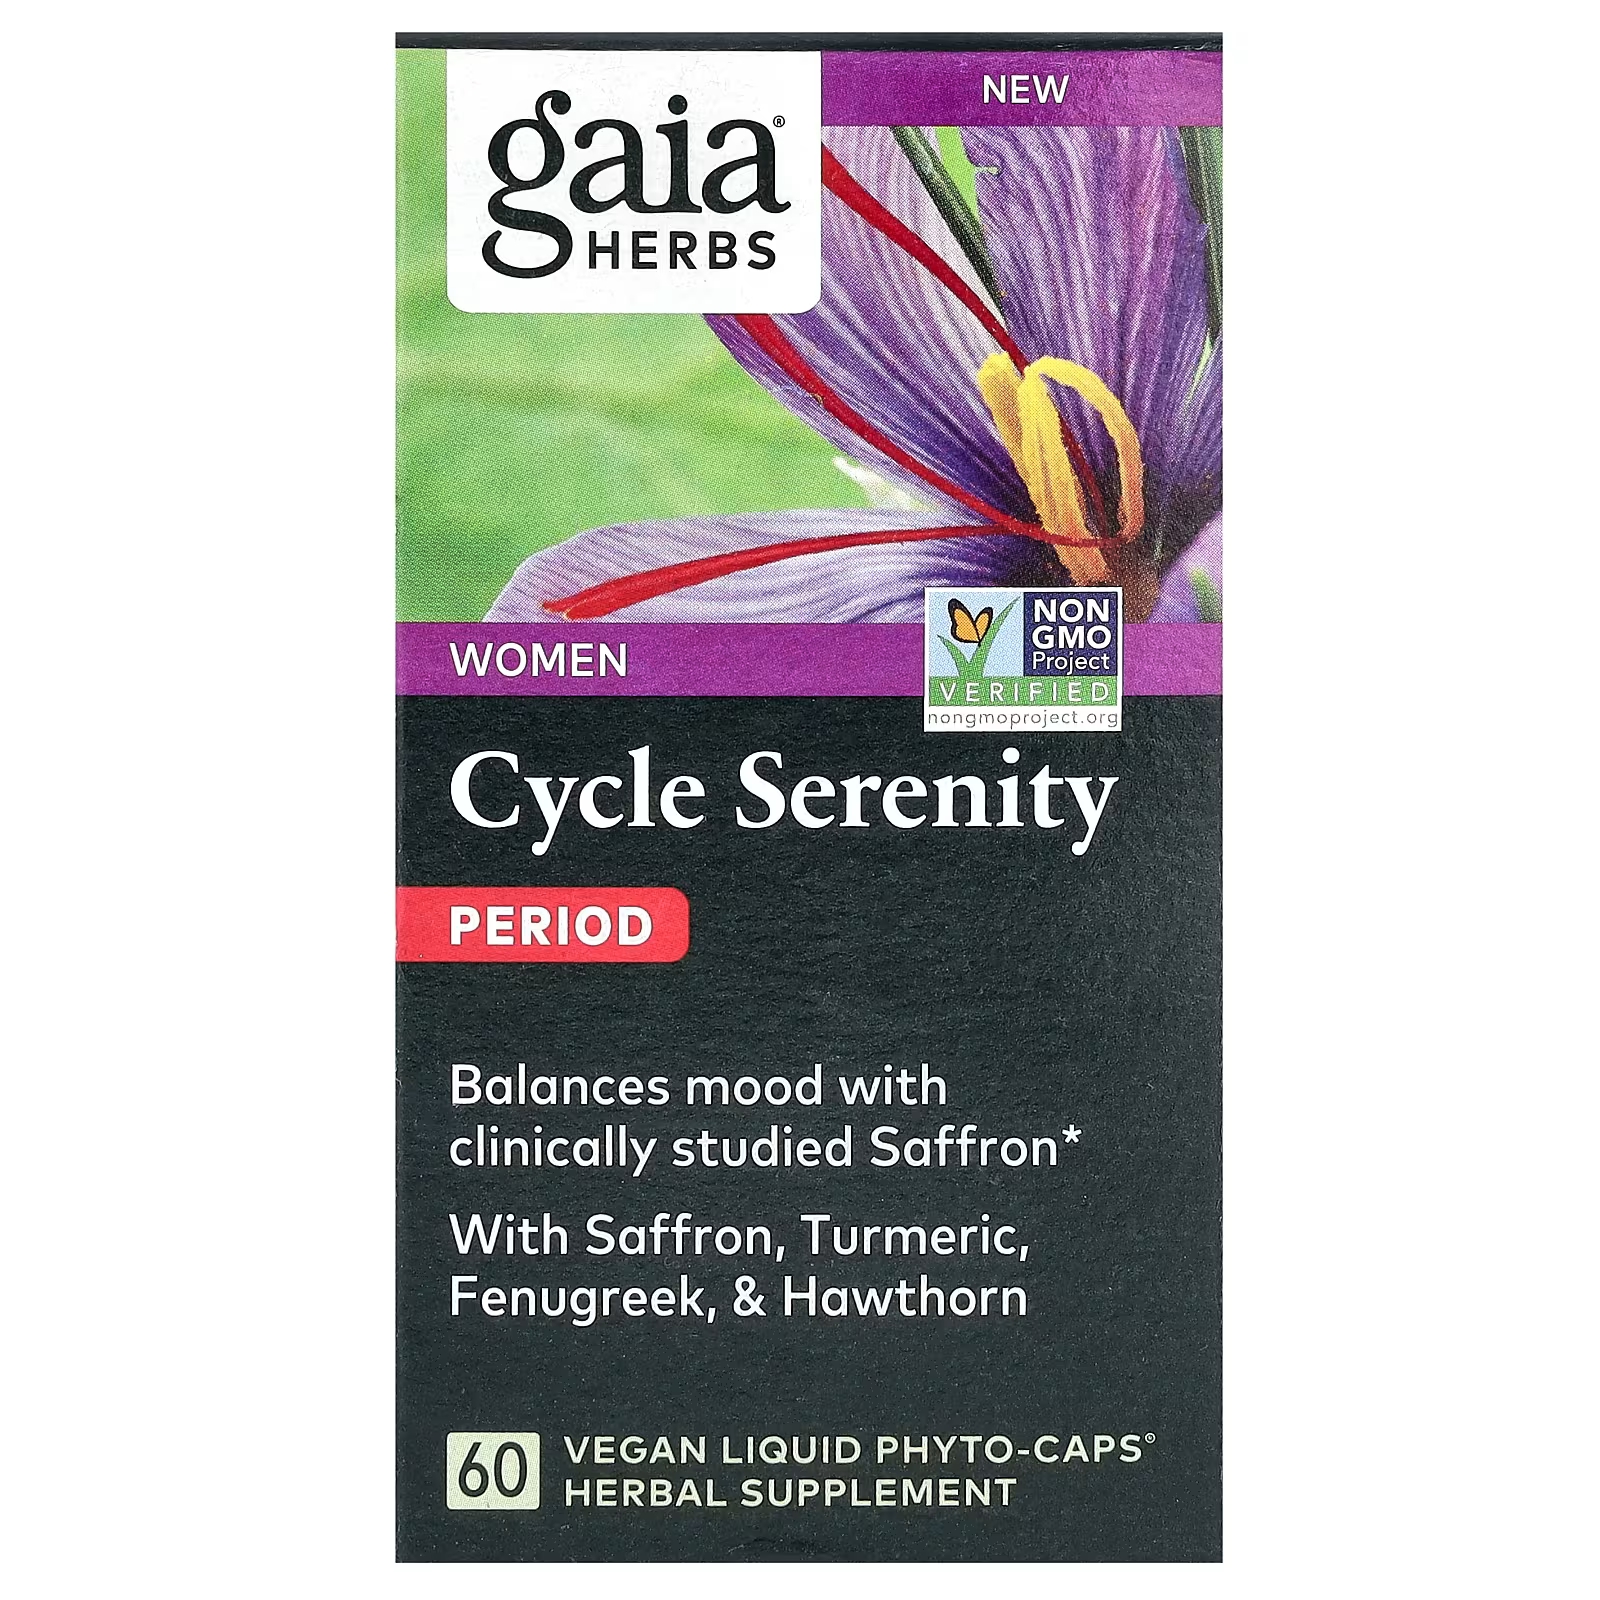 Растительная добавка Gaia Herbs Women Cycle Serenity Period, 60 фитокапсул растительная добавка gaia herbs quick defense 20 жидких фитокапсул